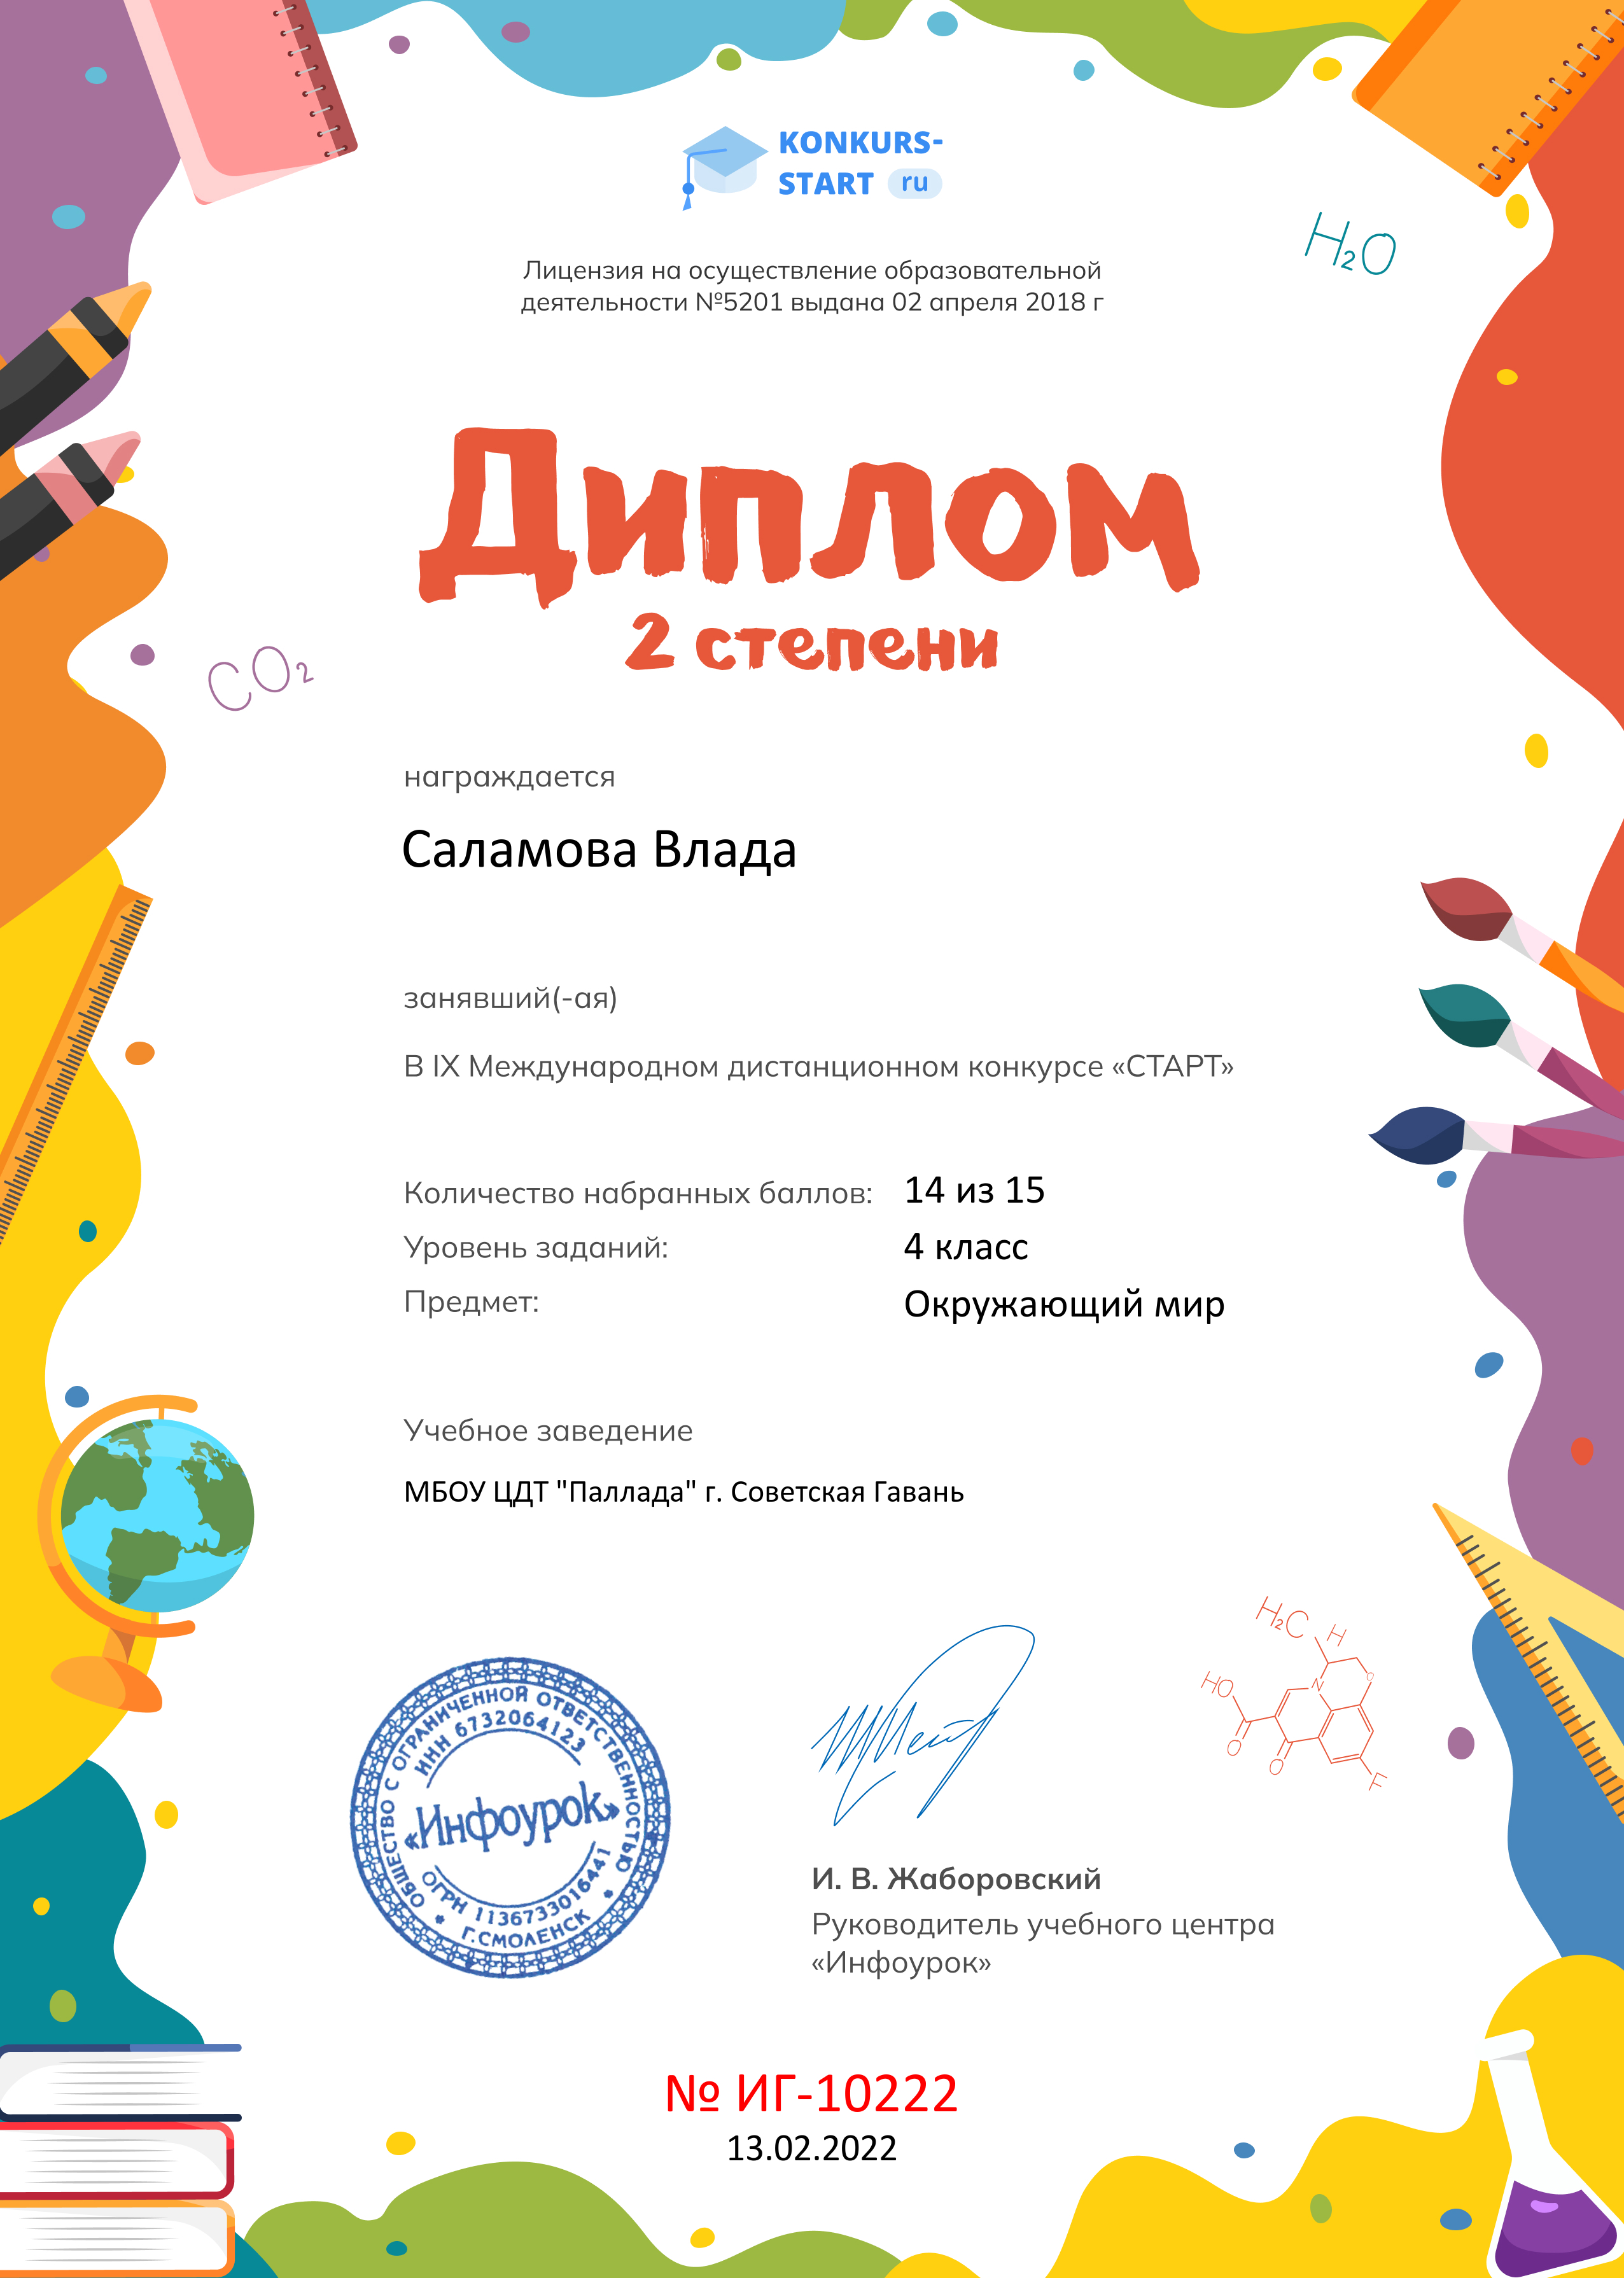 Диплом 2 степени от проекта konkurs-start.ru